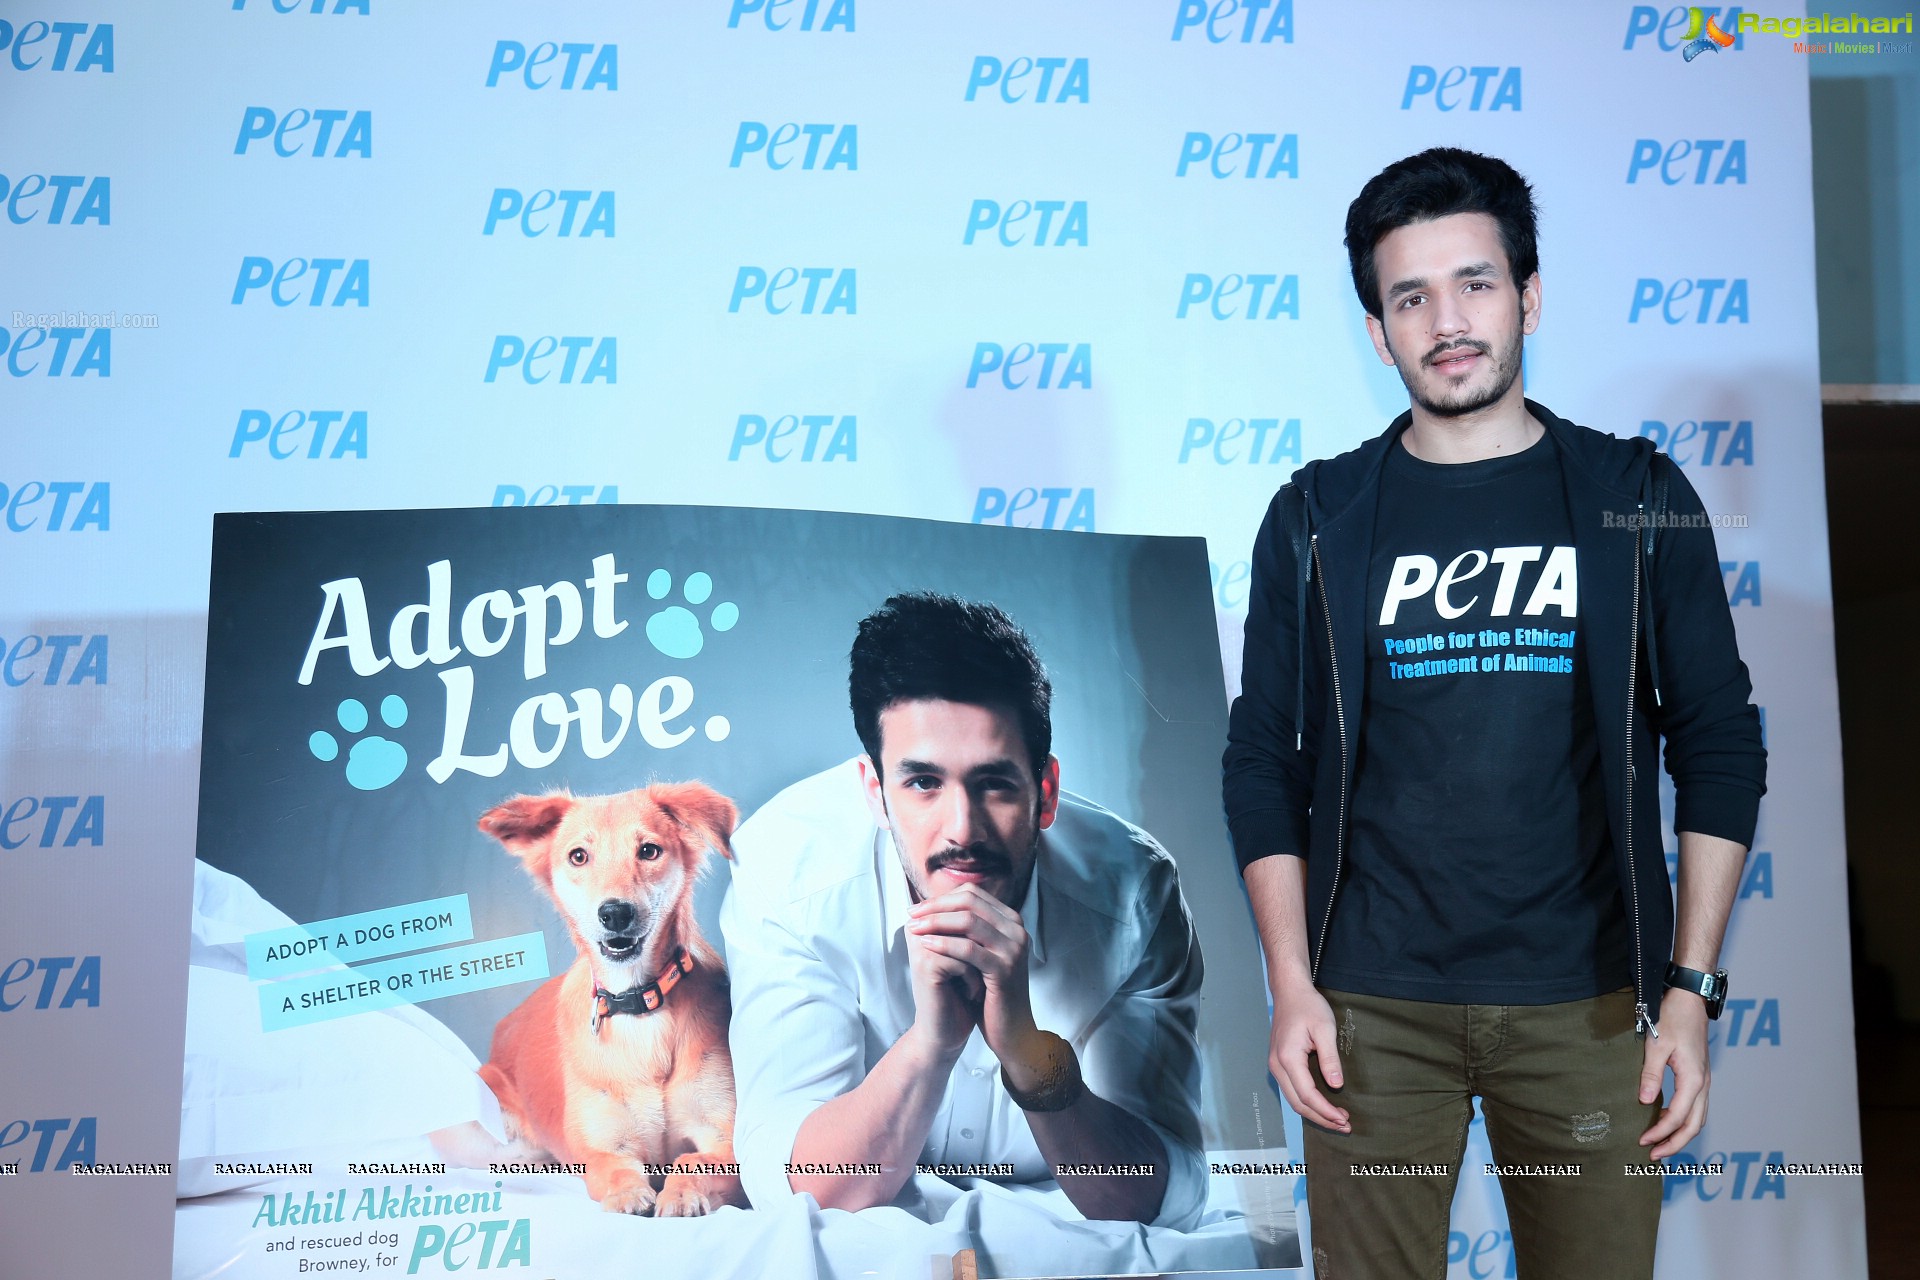 PETA New Adoption Campaign Launch by Akhil Akkineni at Annapurna 7 Acres, Hyderabad